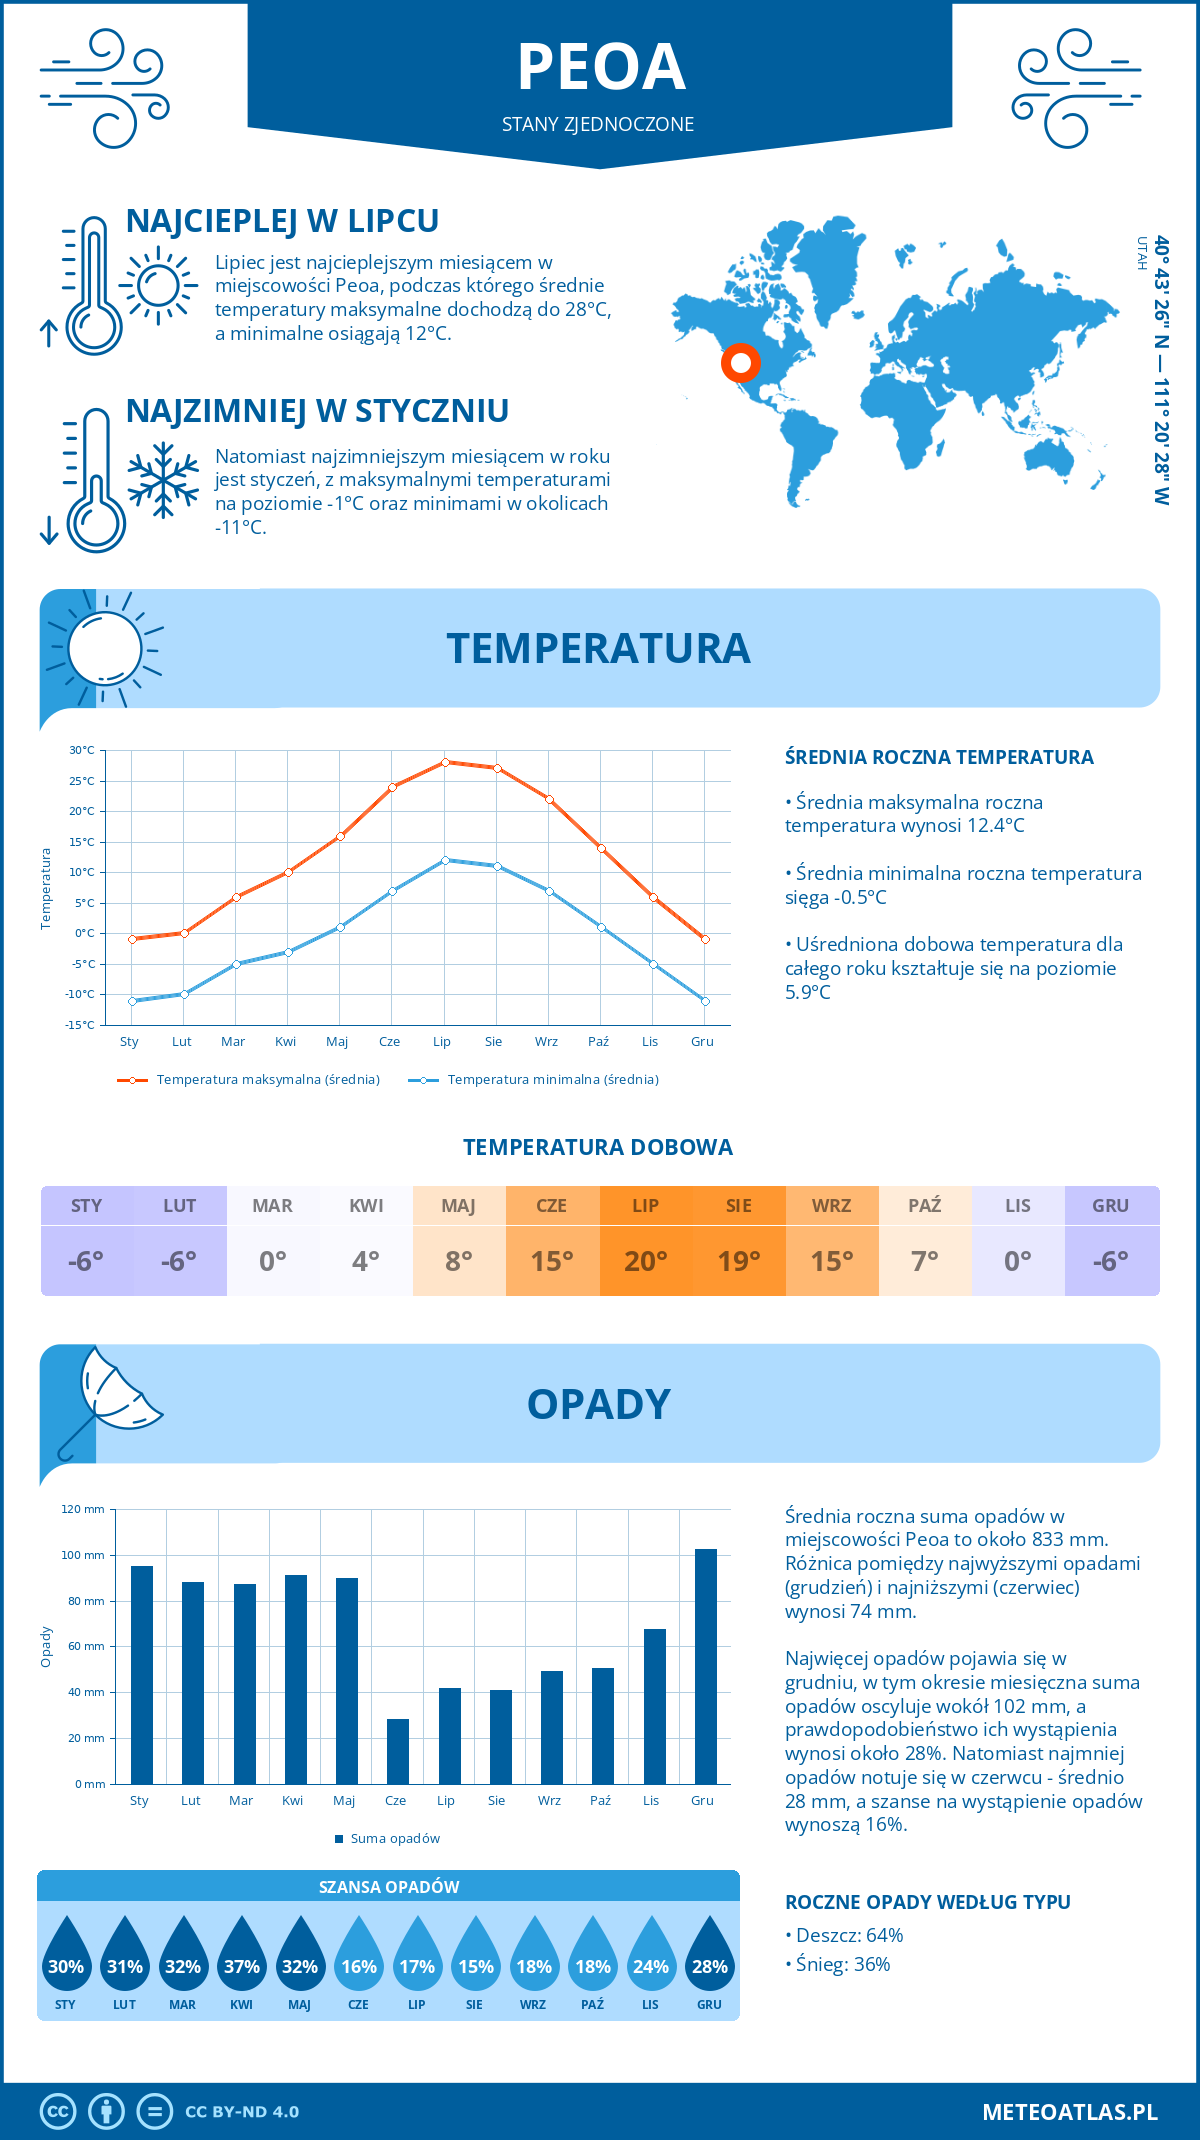 Pogoda Peoa (Stany Zjednoczone). Temperatura oraz opady.